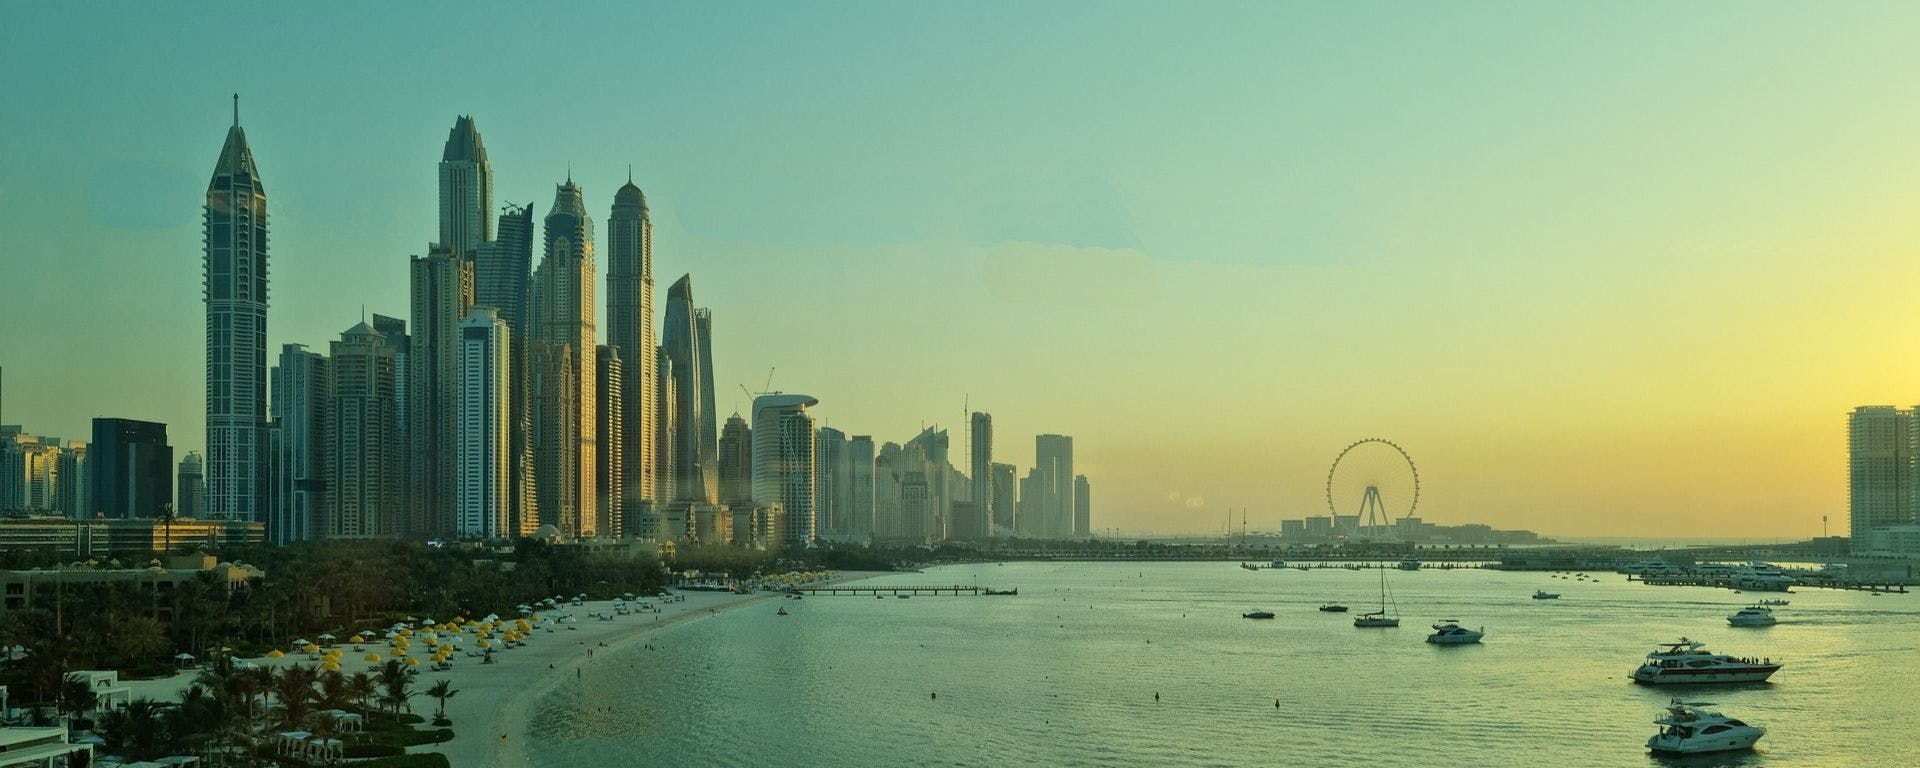 Sunset Beach (Dubai) - Card Background Image